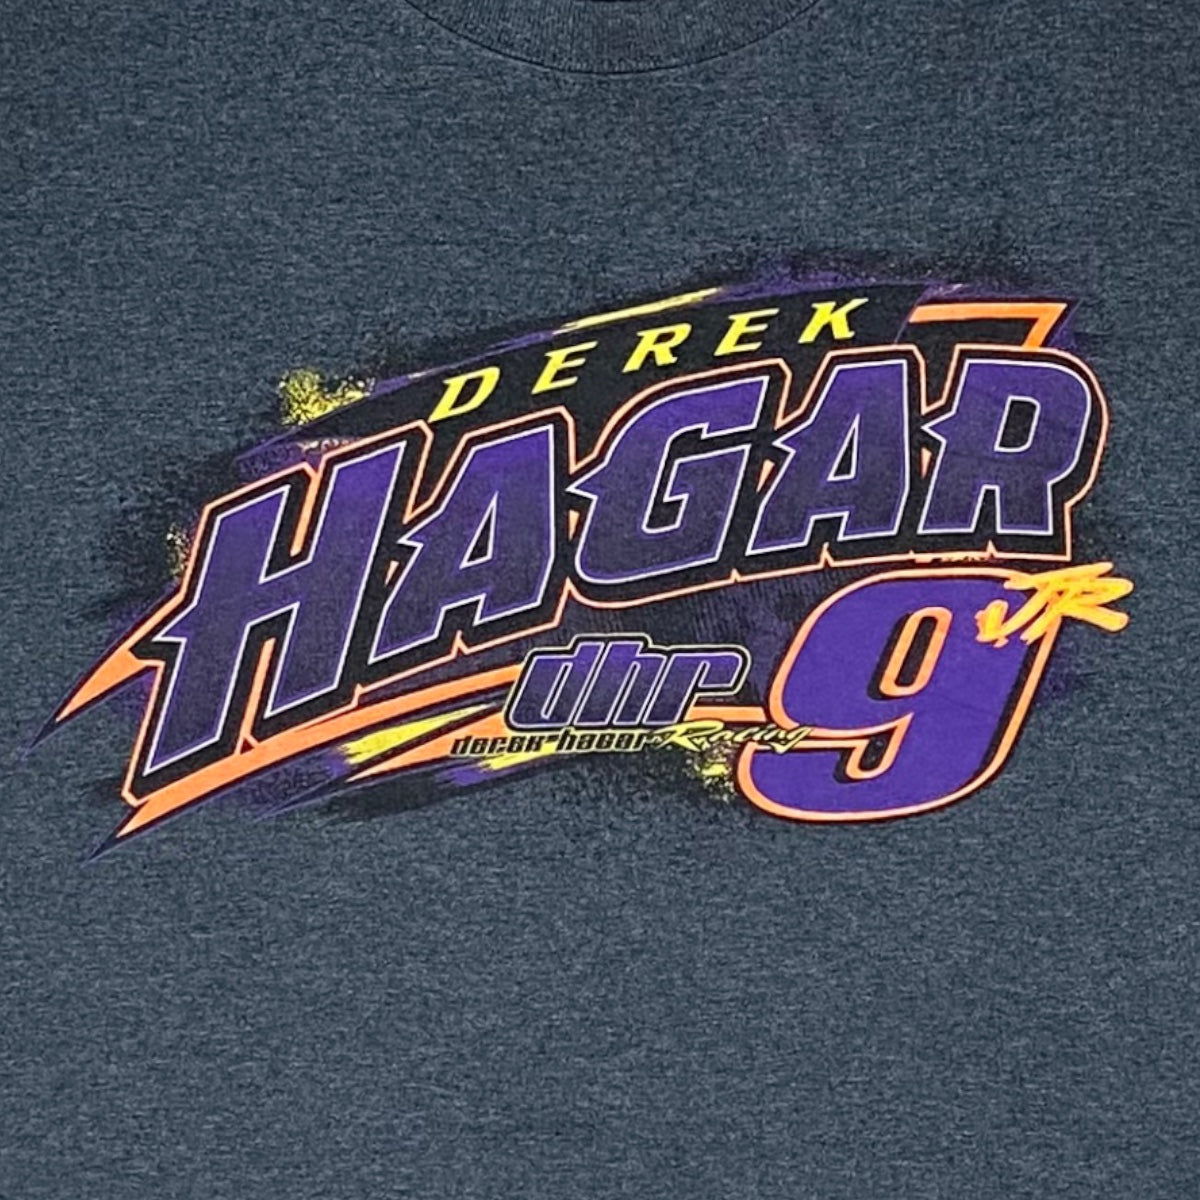 Derek Hagar racing t-shirt - L